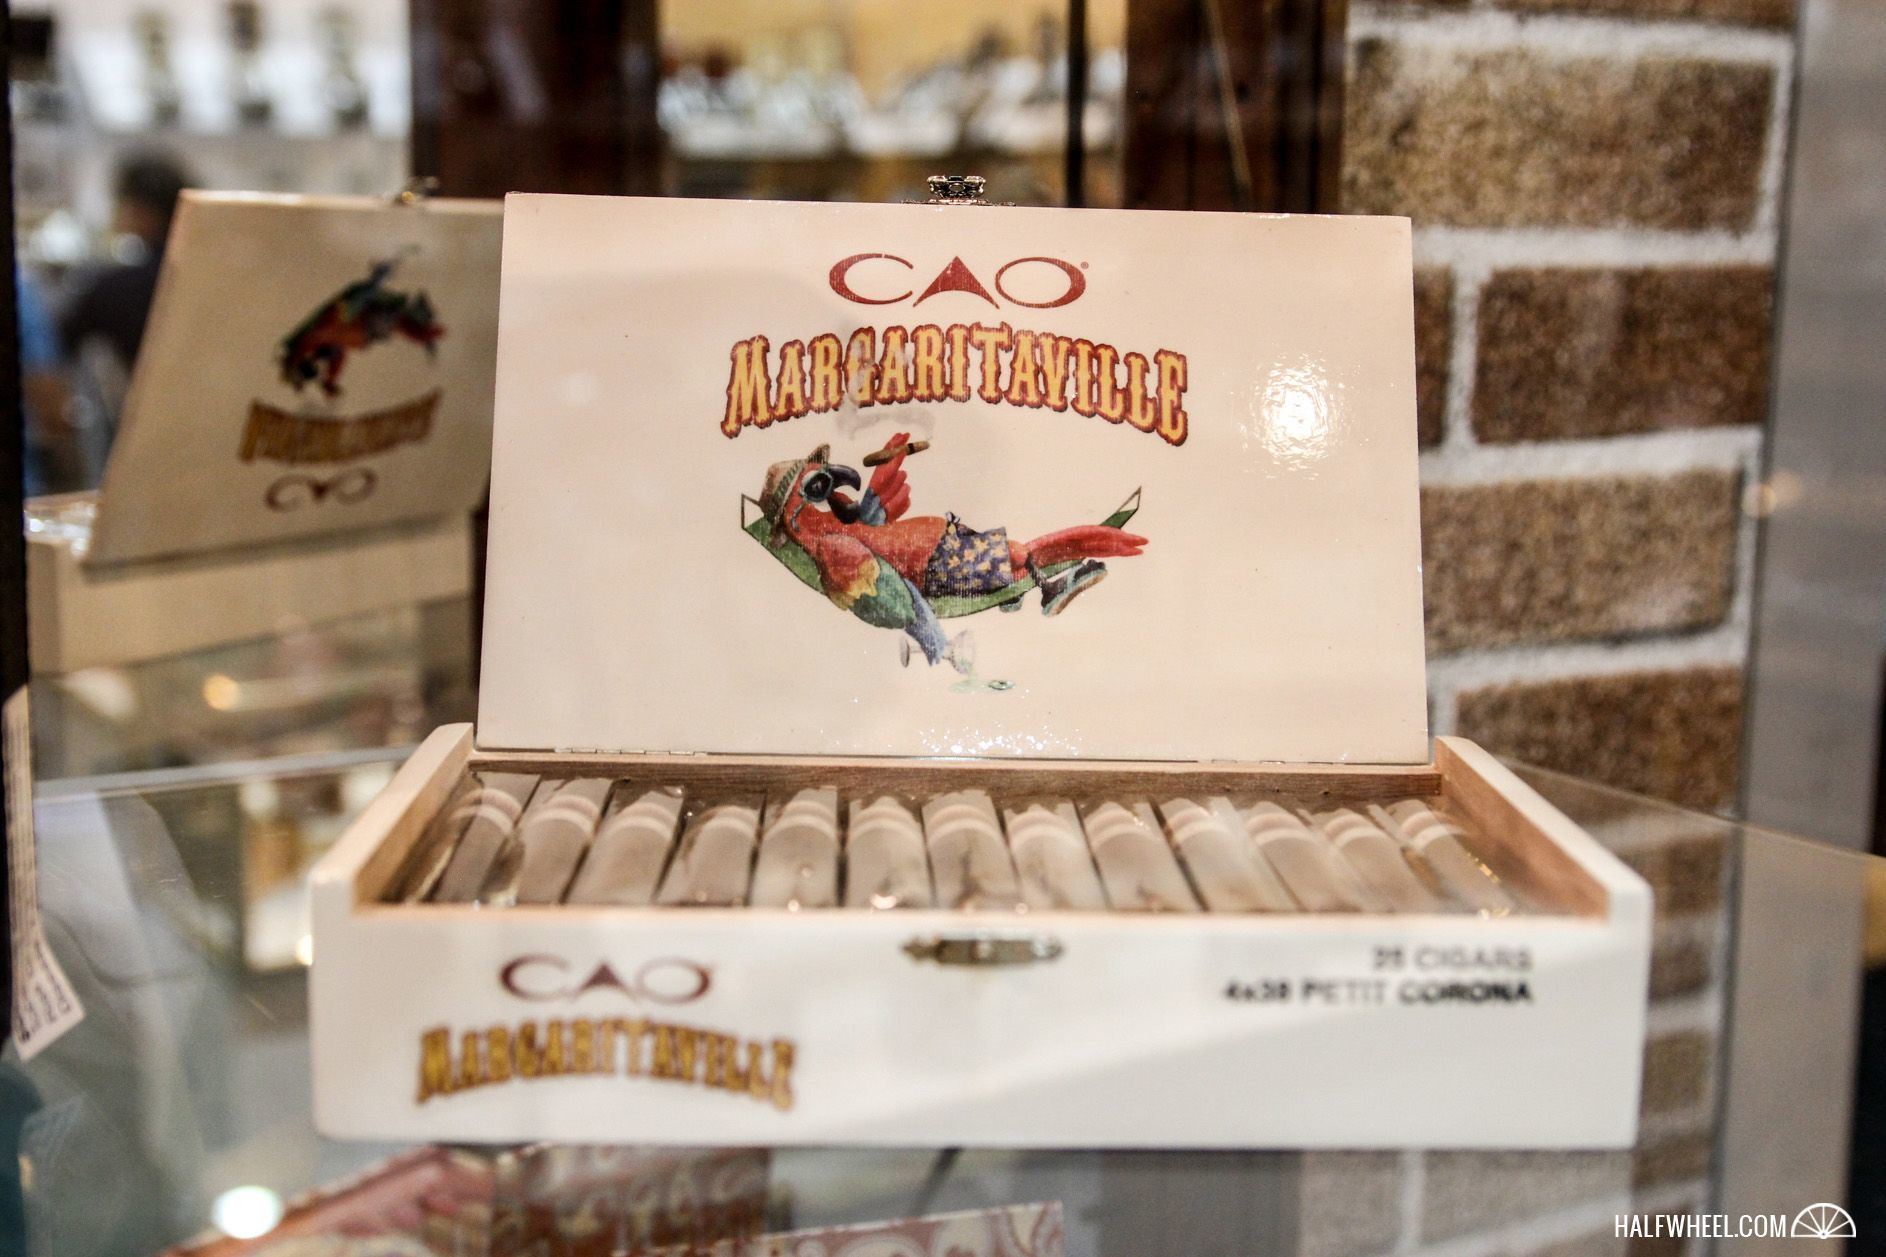 General Cigar Co CAO Margaritaville